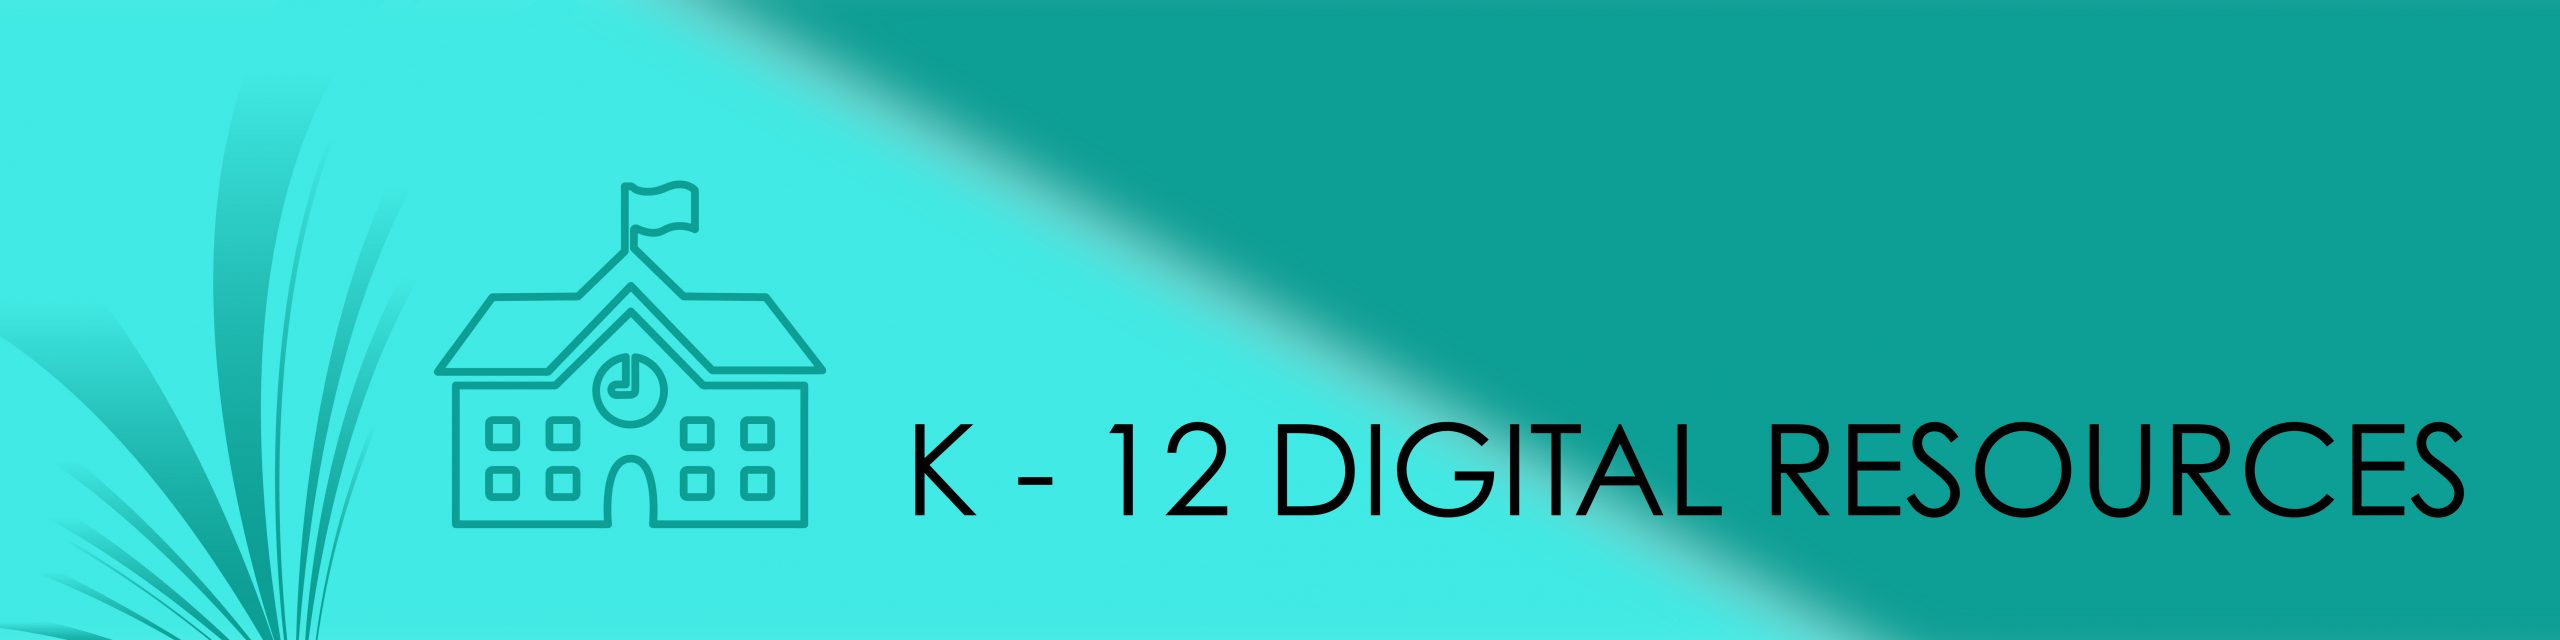 K-12 Digital Resources